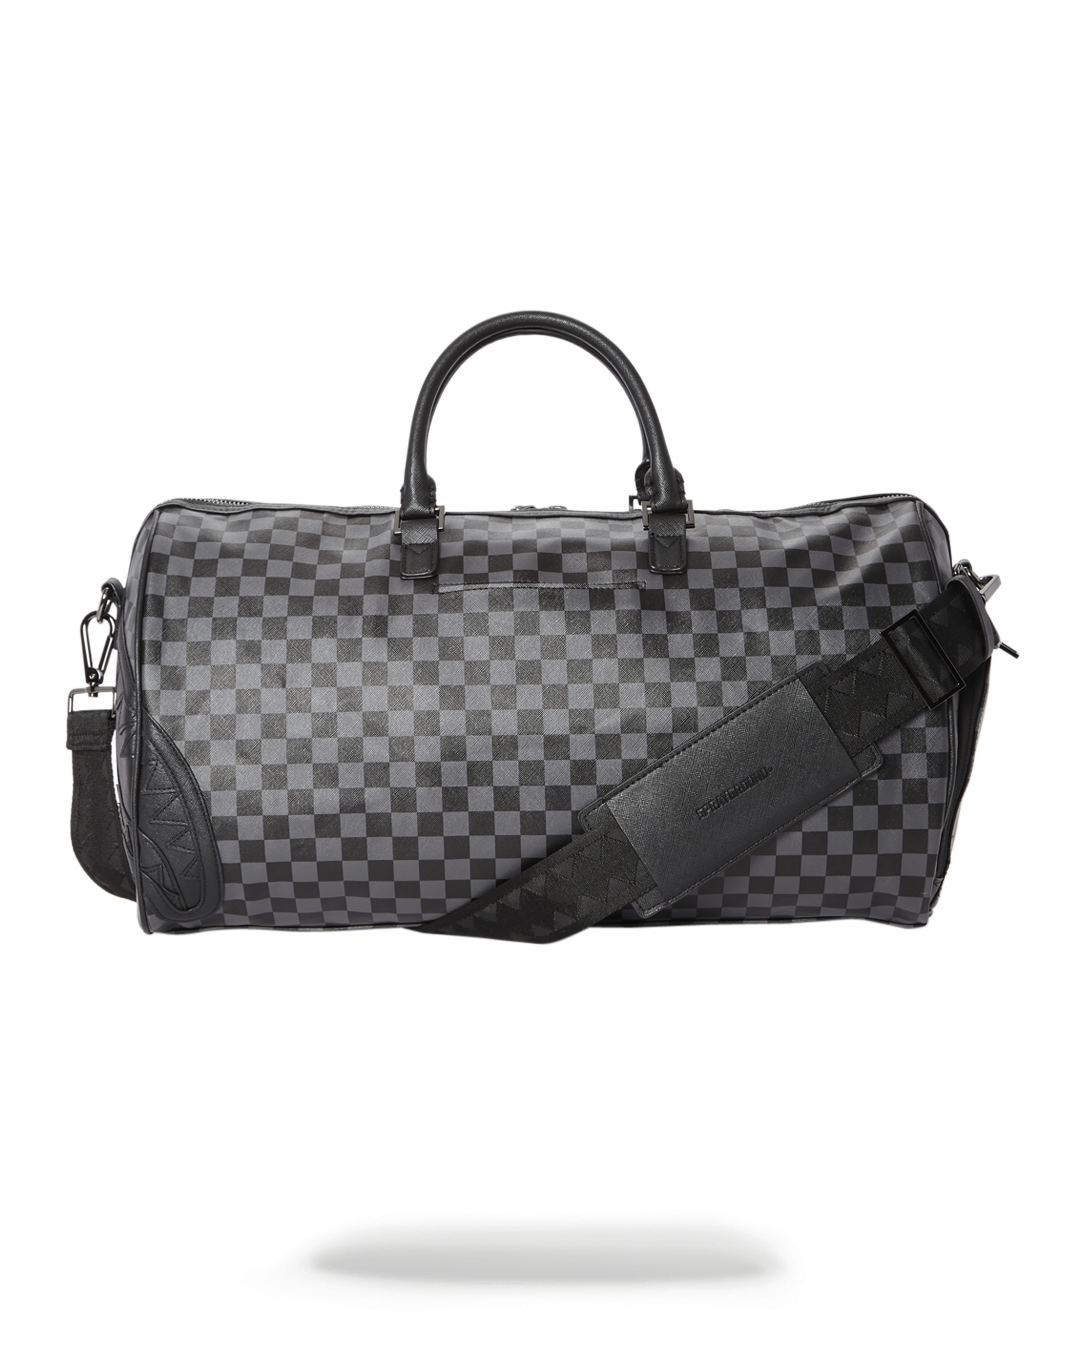 Sprayground - Henny Phantom Mini Duffle Bag 910d5586nsz